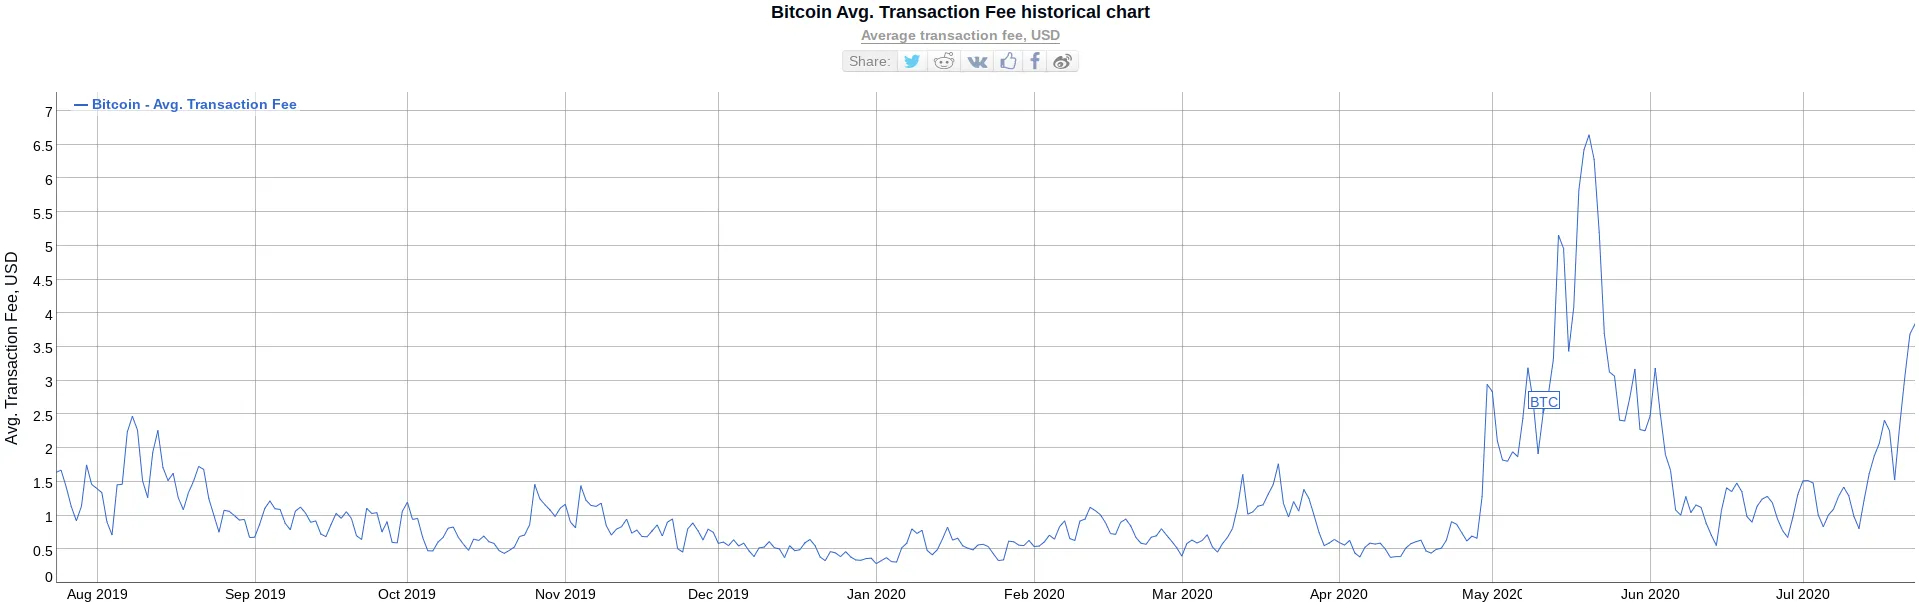 Bitcoin Transaction fees are increasing